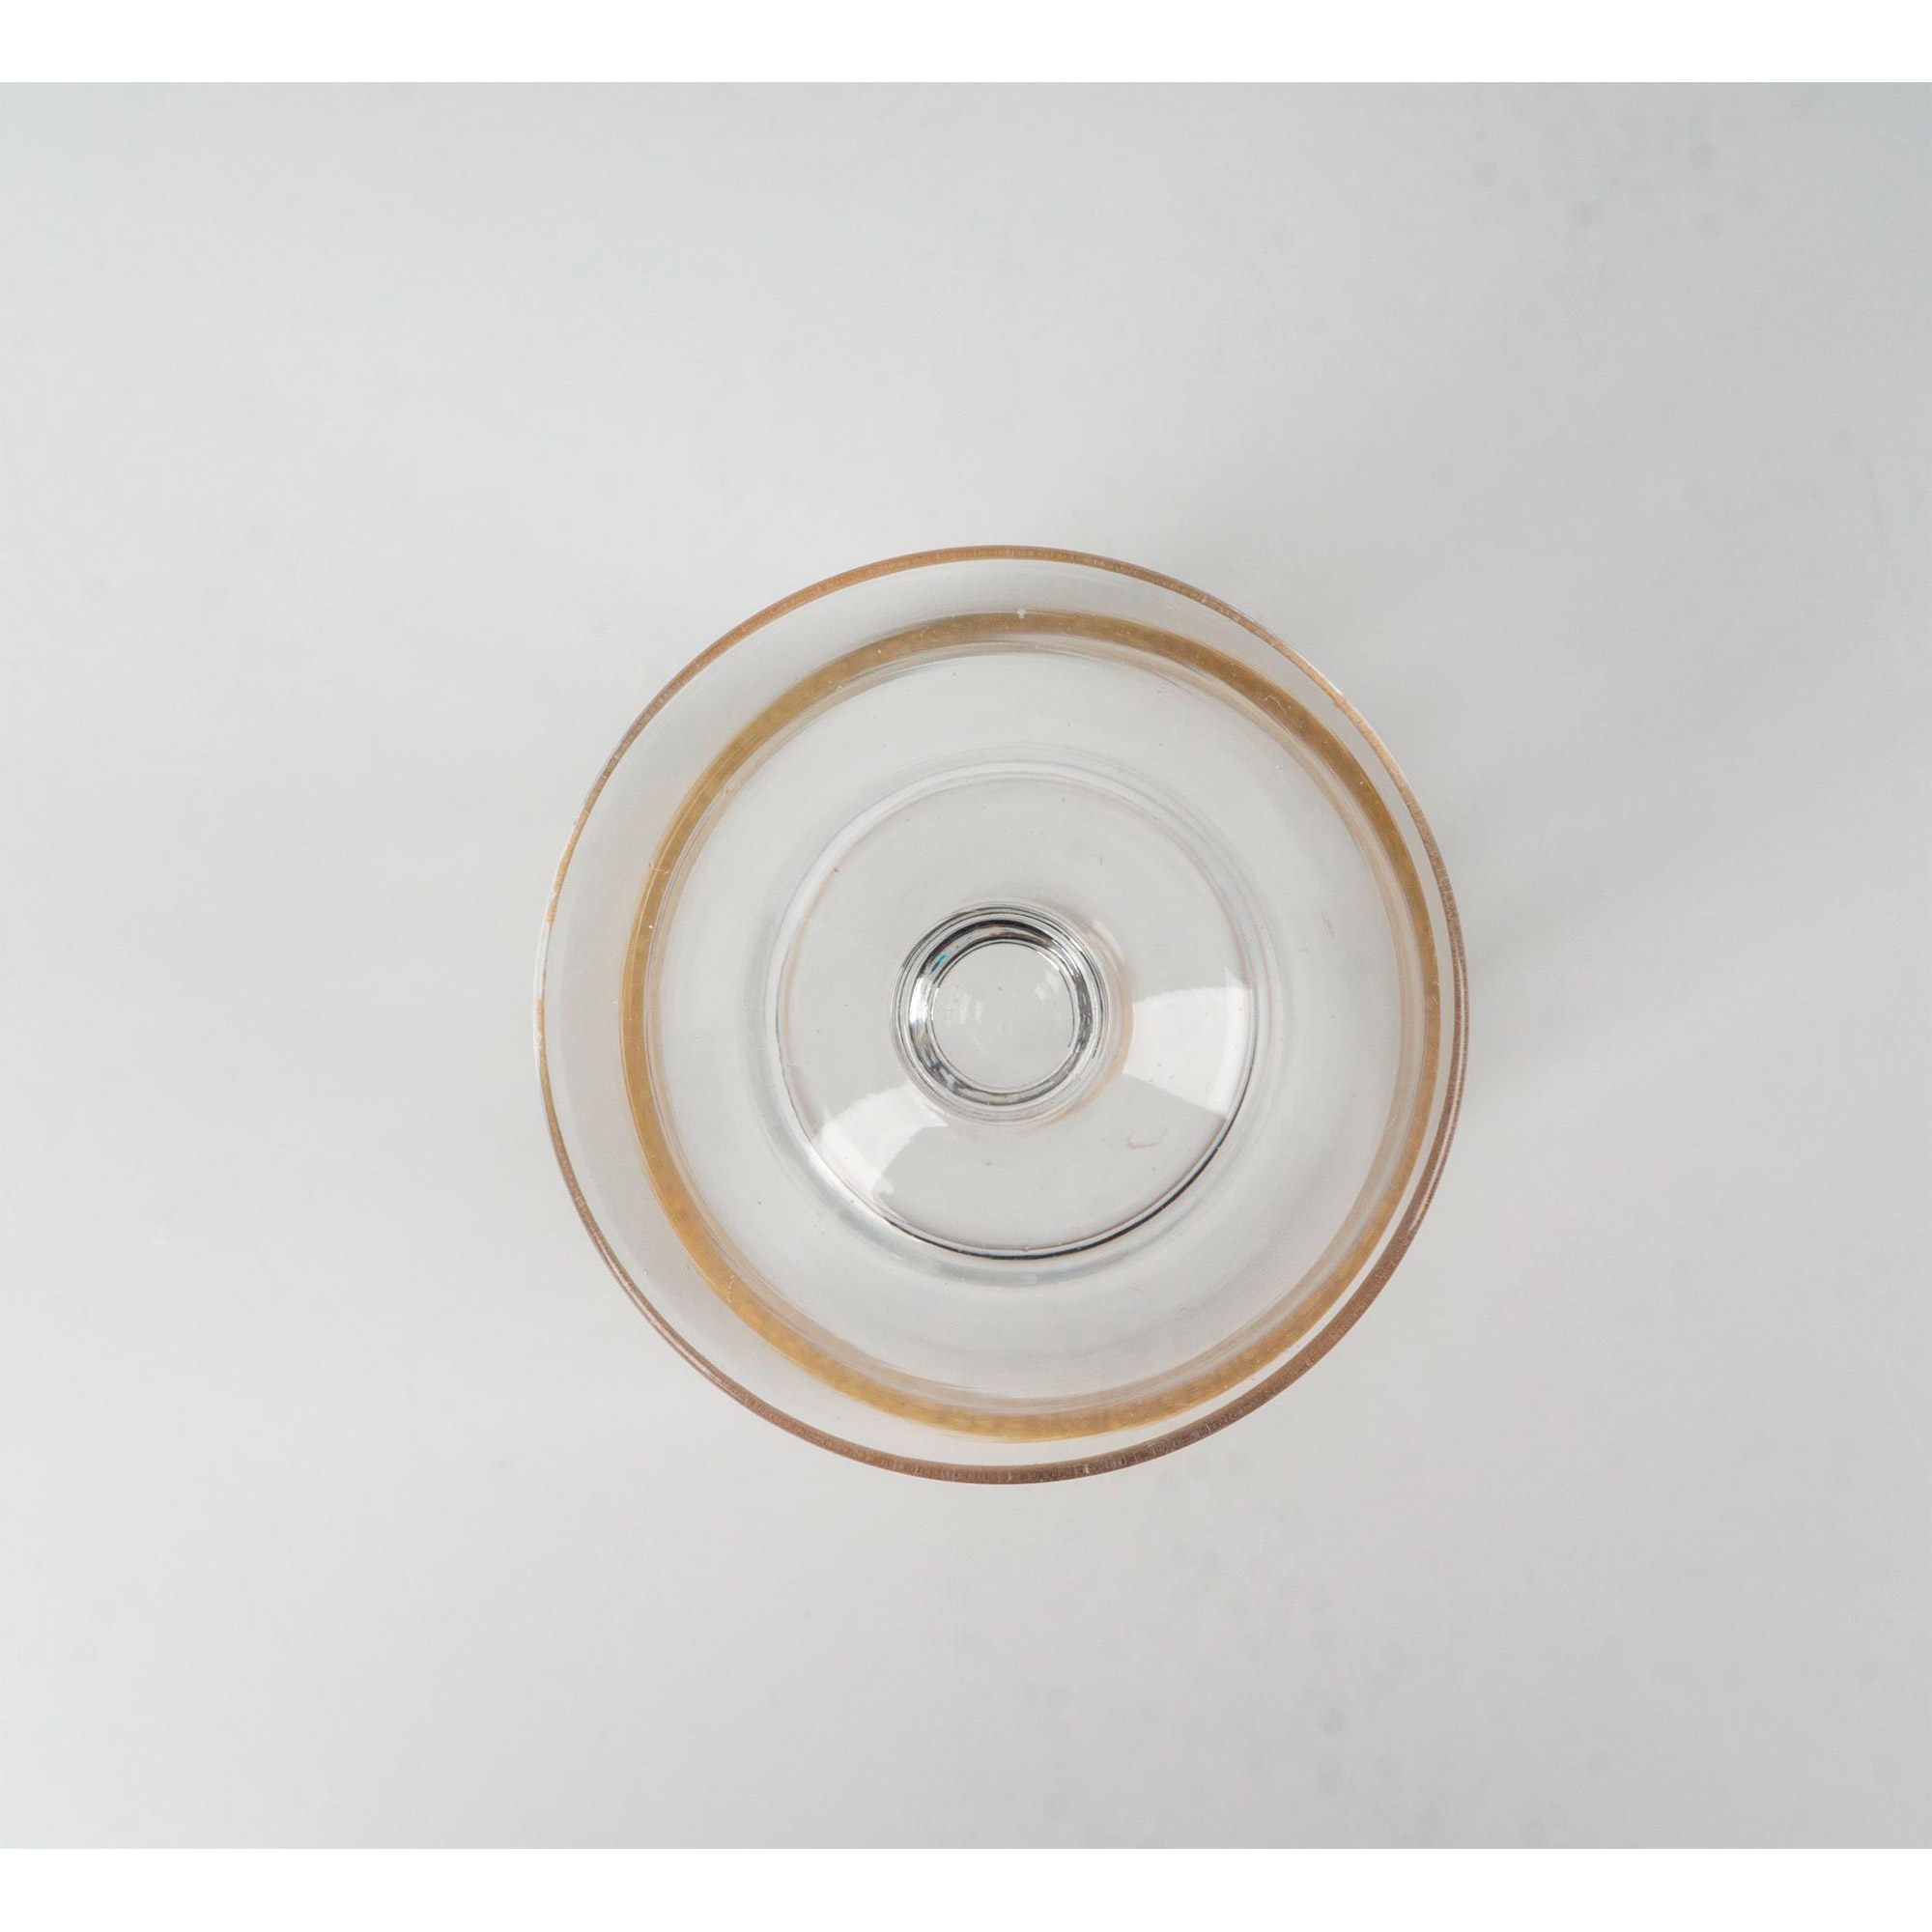 8pc Rambler Rose Gold Rimmed Iced Tea Glasses - Image 3 of 3